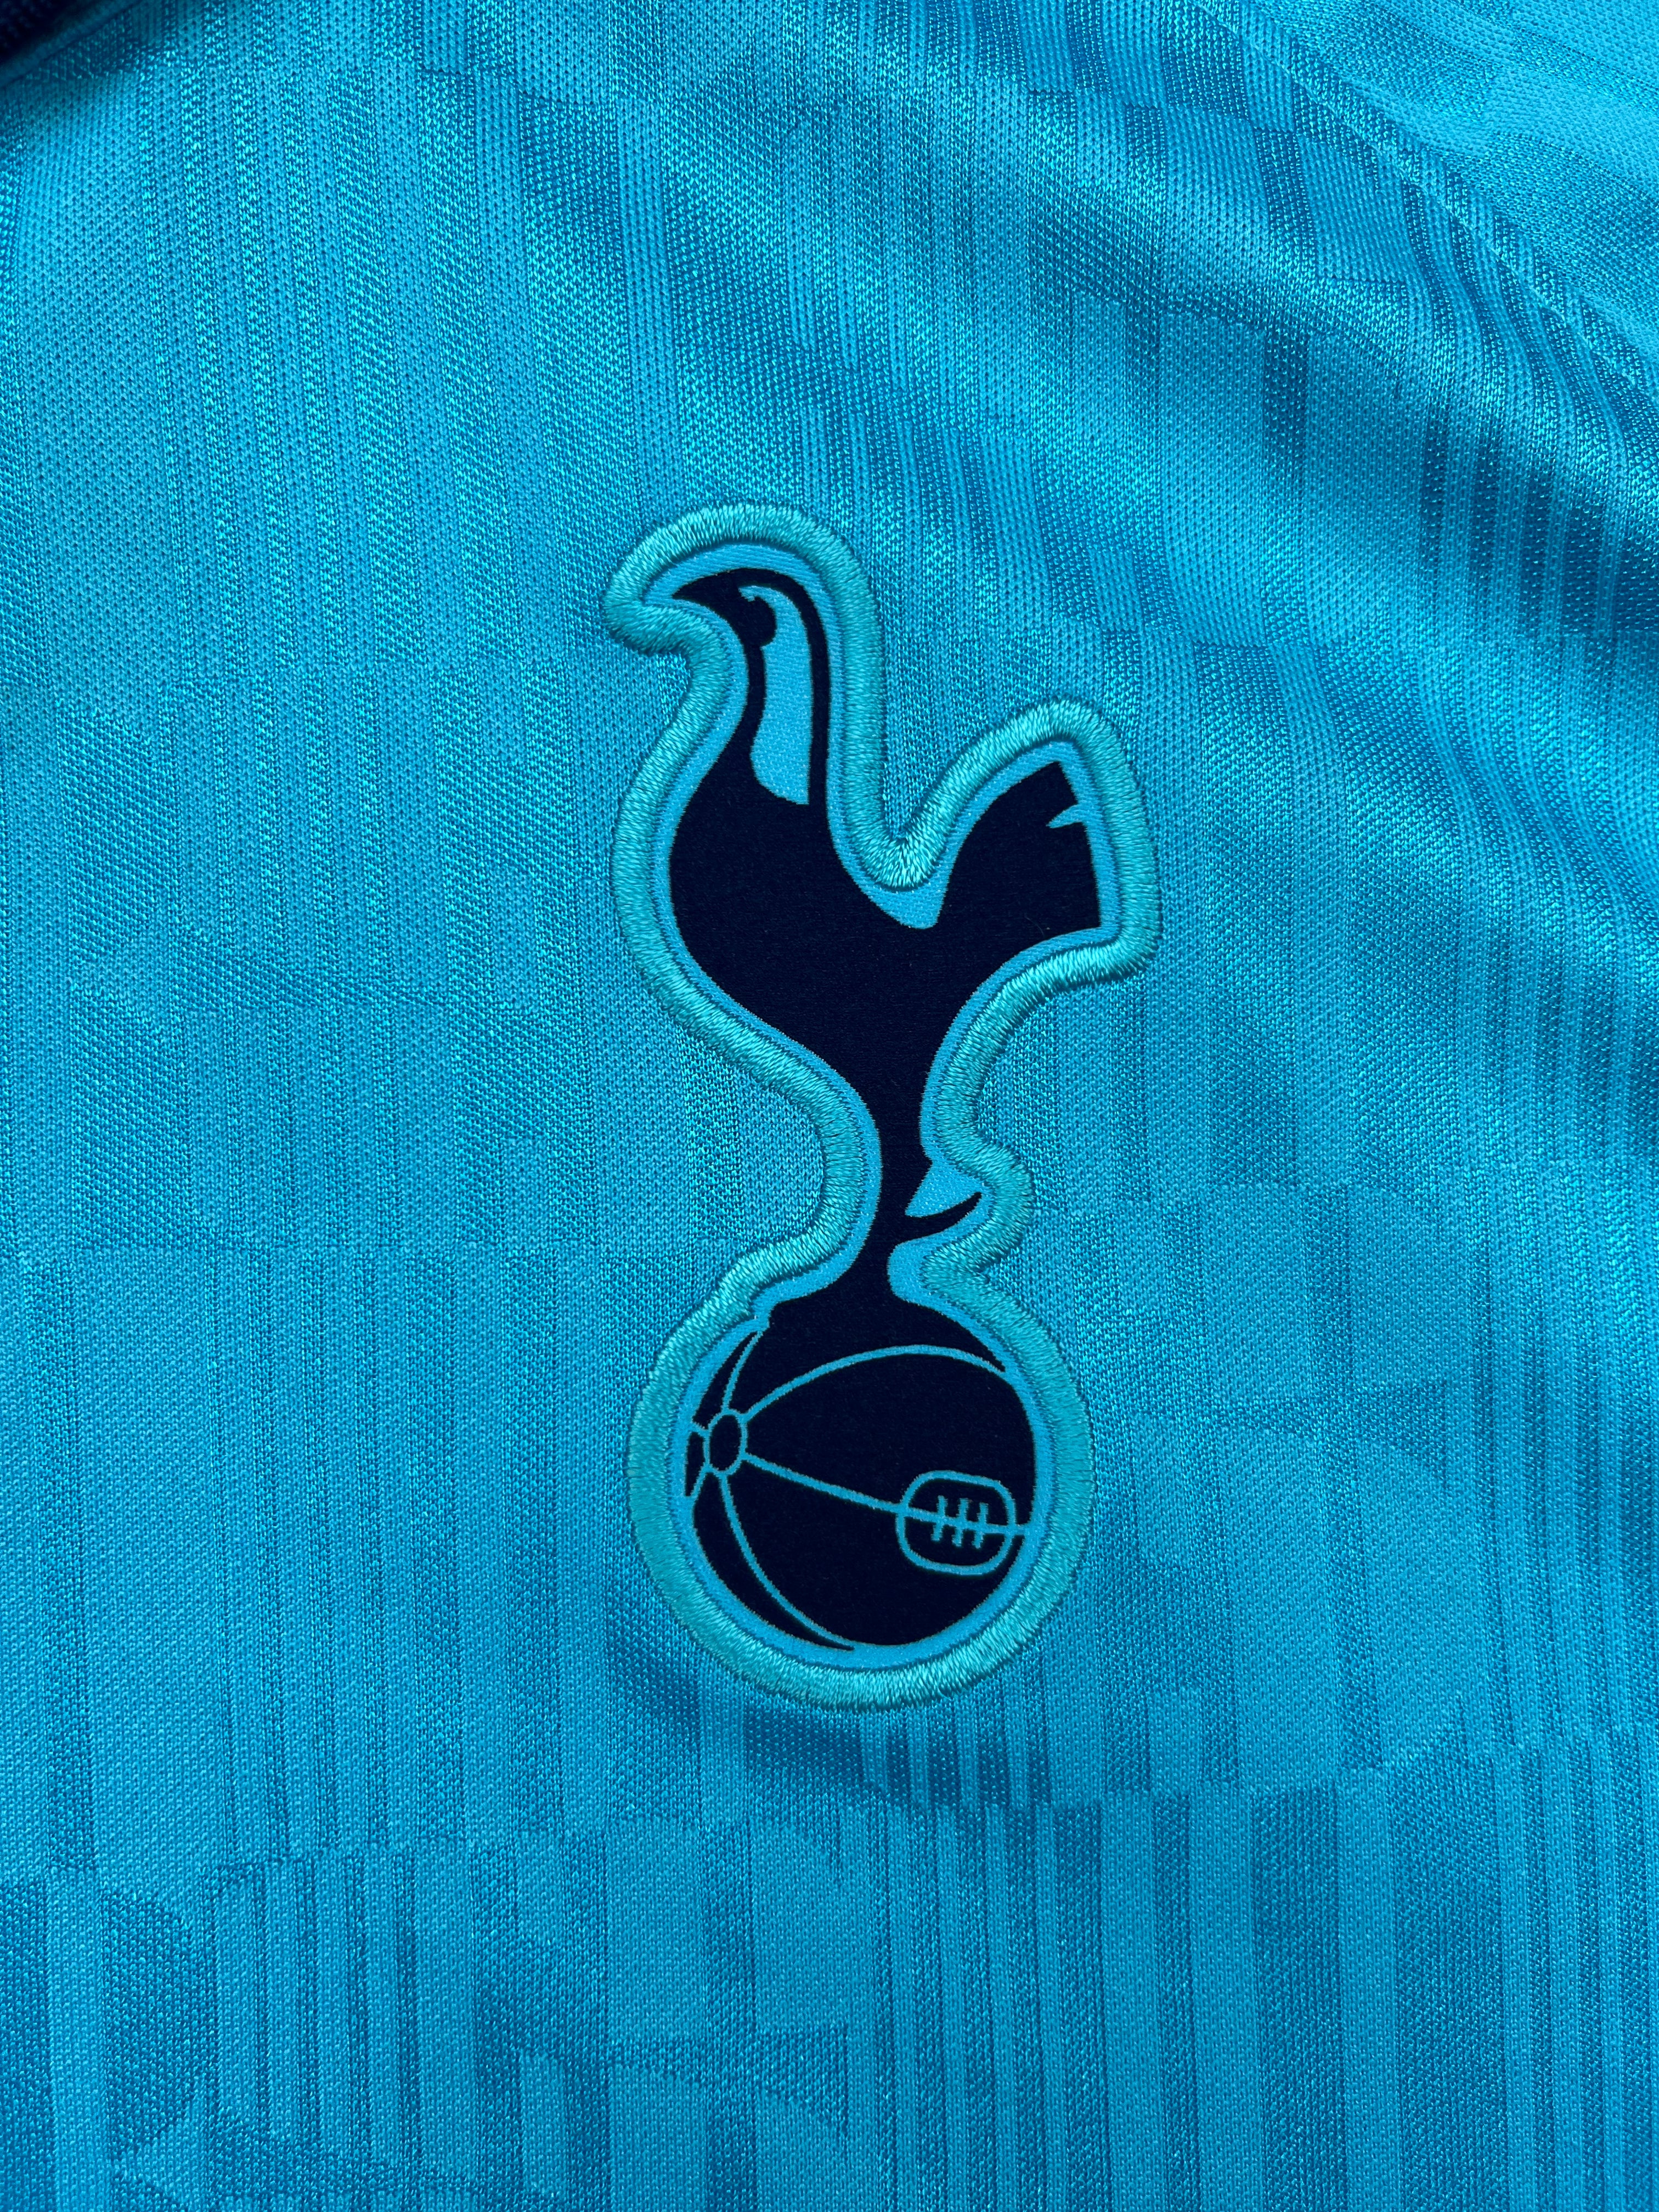 2019/20 Tottenham Hotspur Third Shirt (S) 9/10